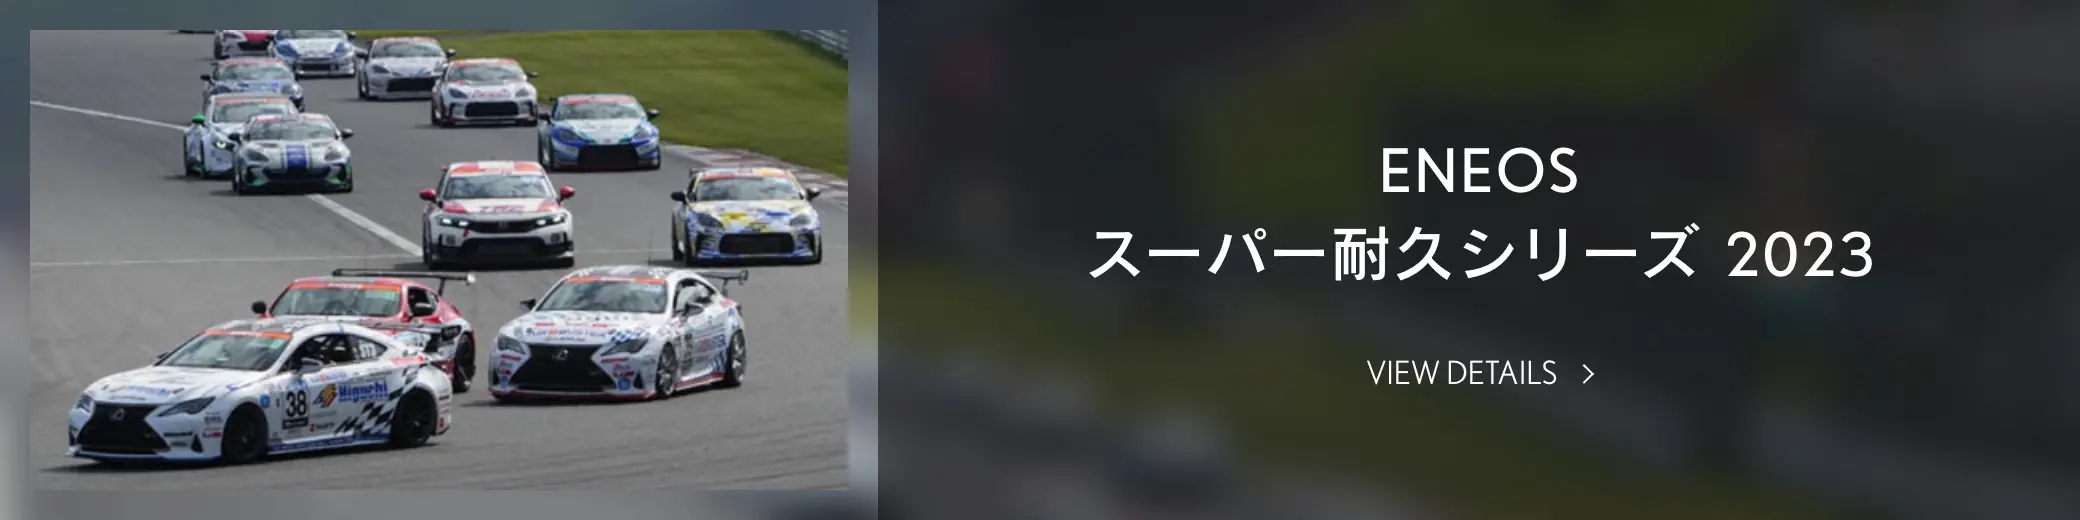 ENEOSS スーパー耐久シリーズ 2023